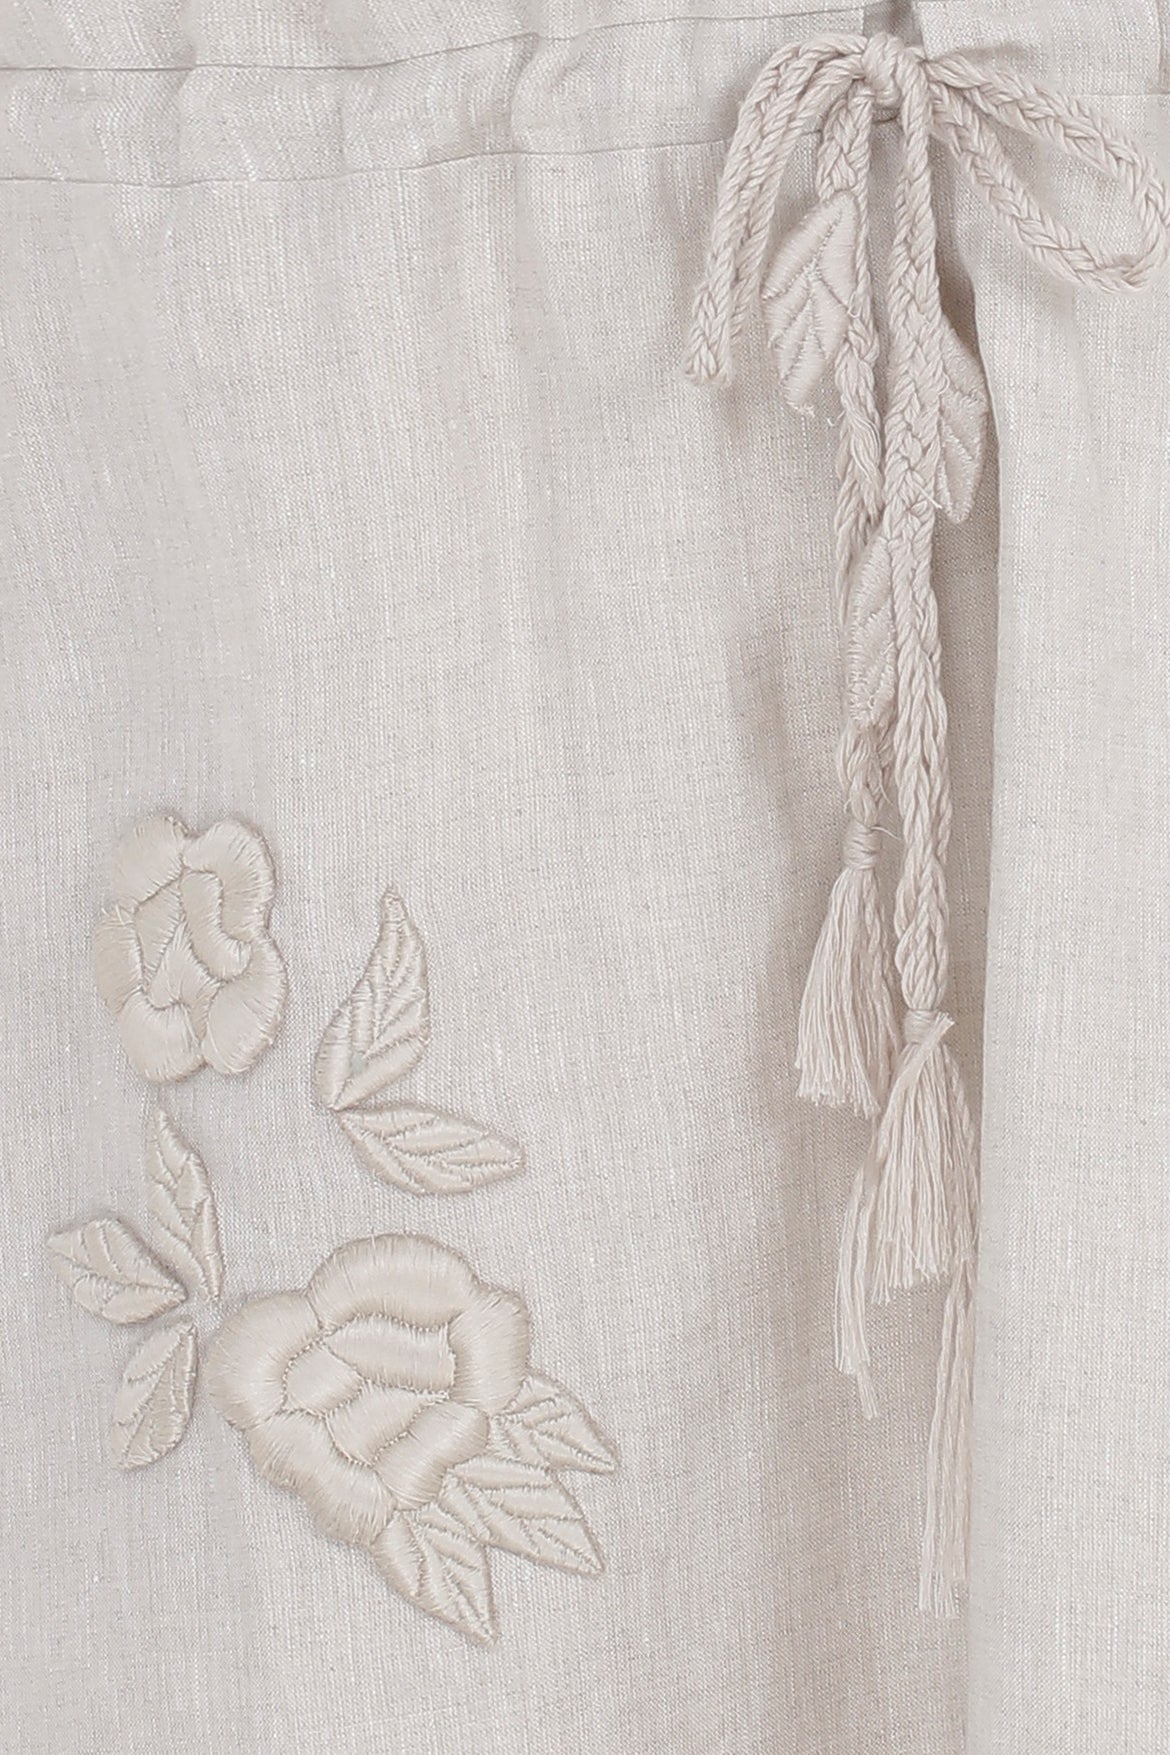 Embroidered Long Linen Dress